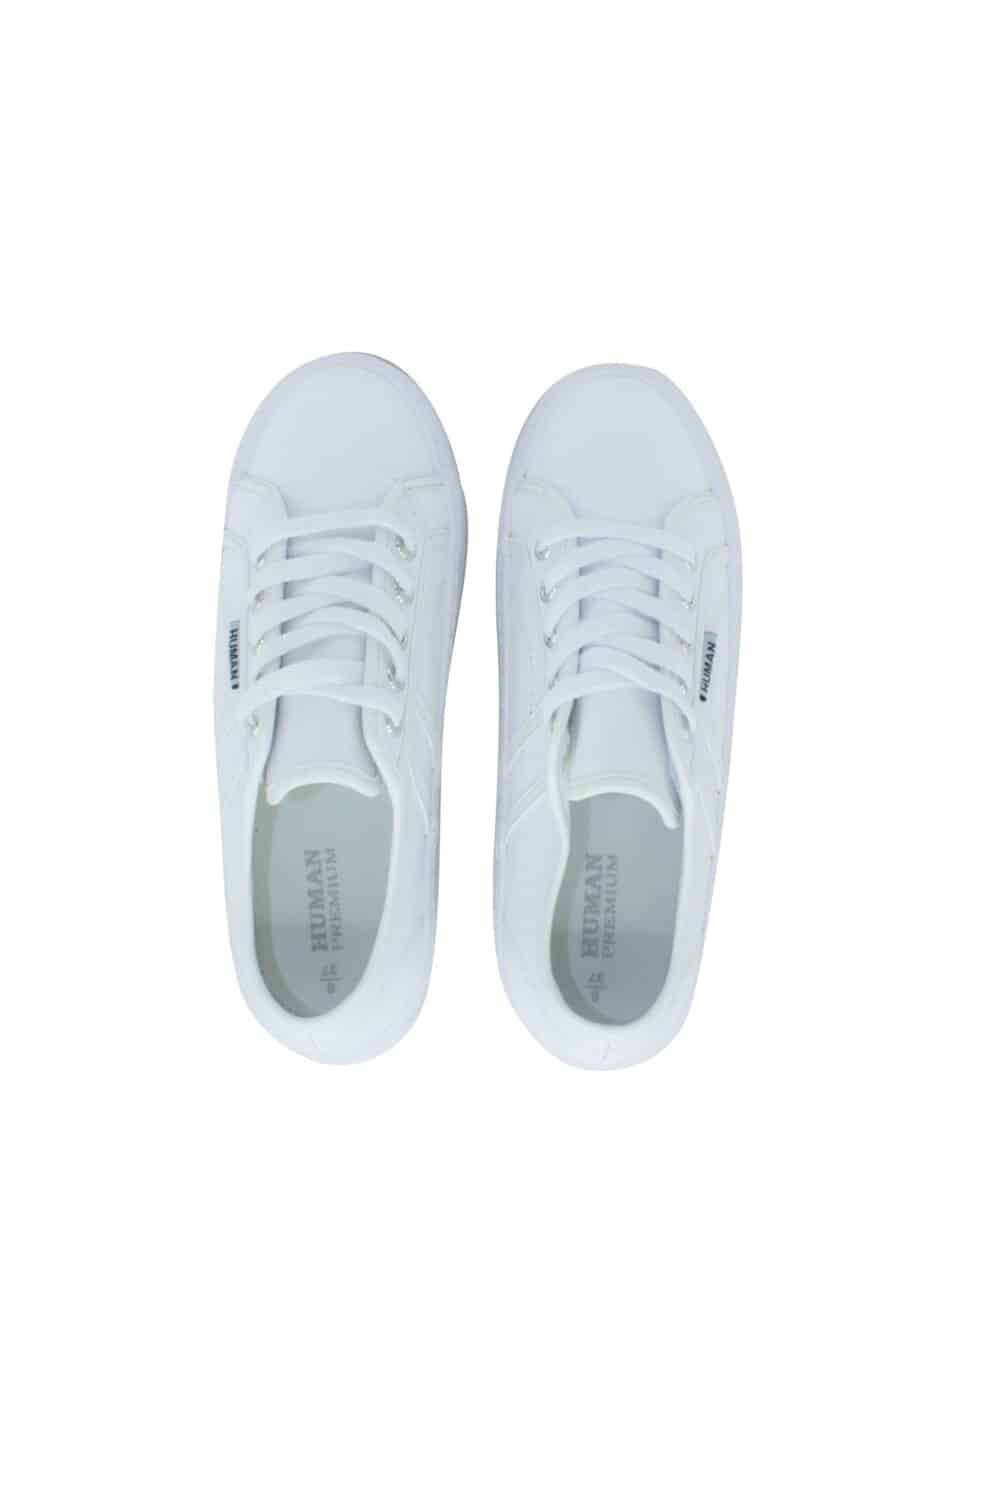 Human Shoes - Cass White Leather Sneaker - Mokye